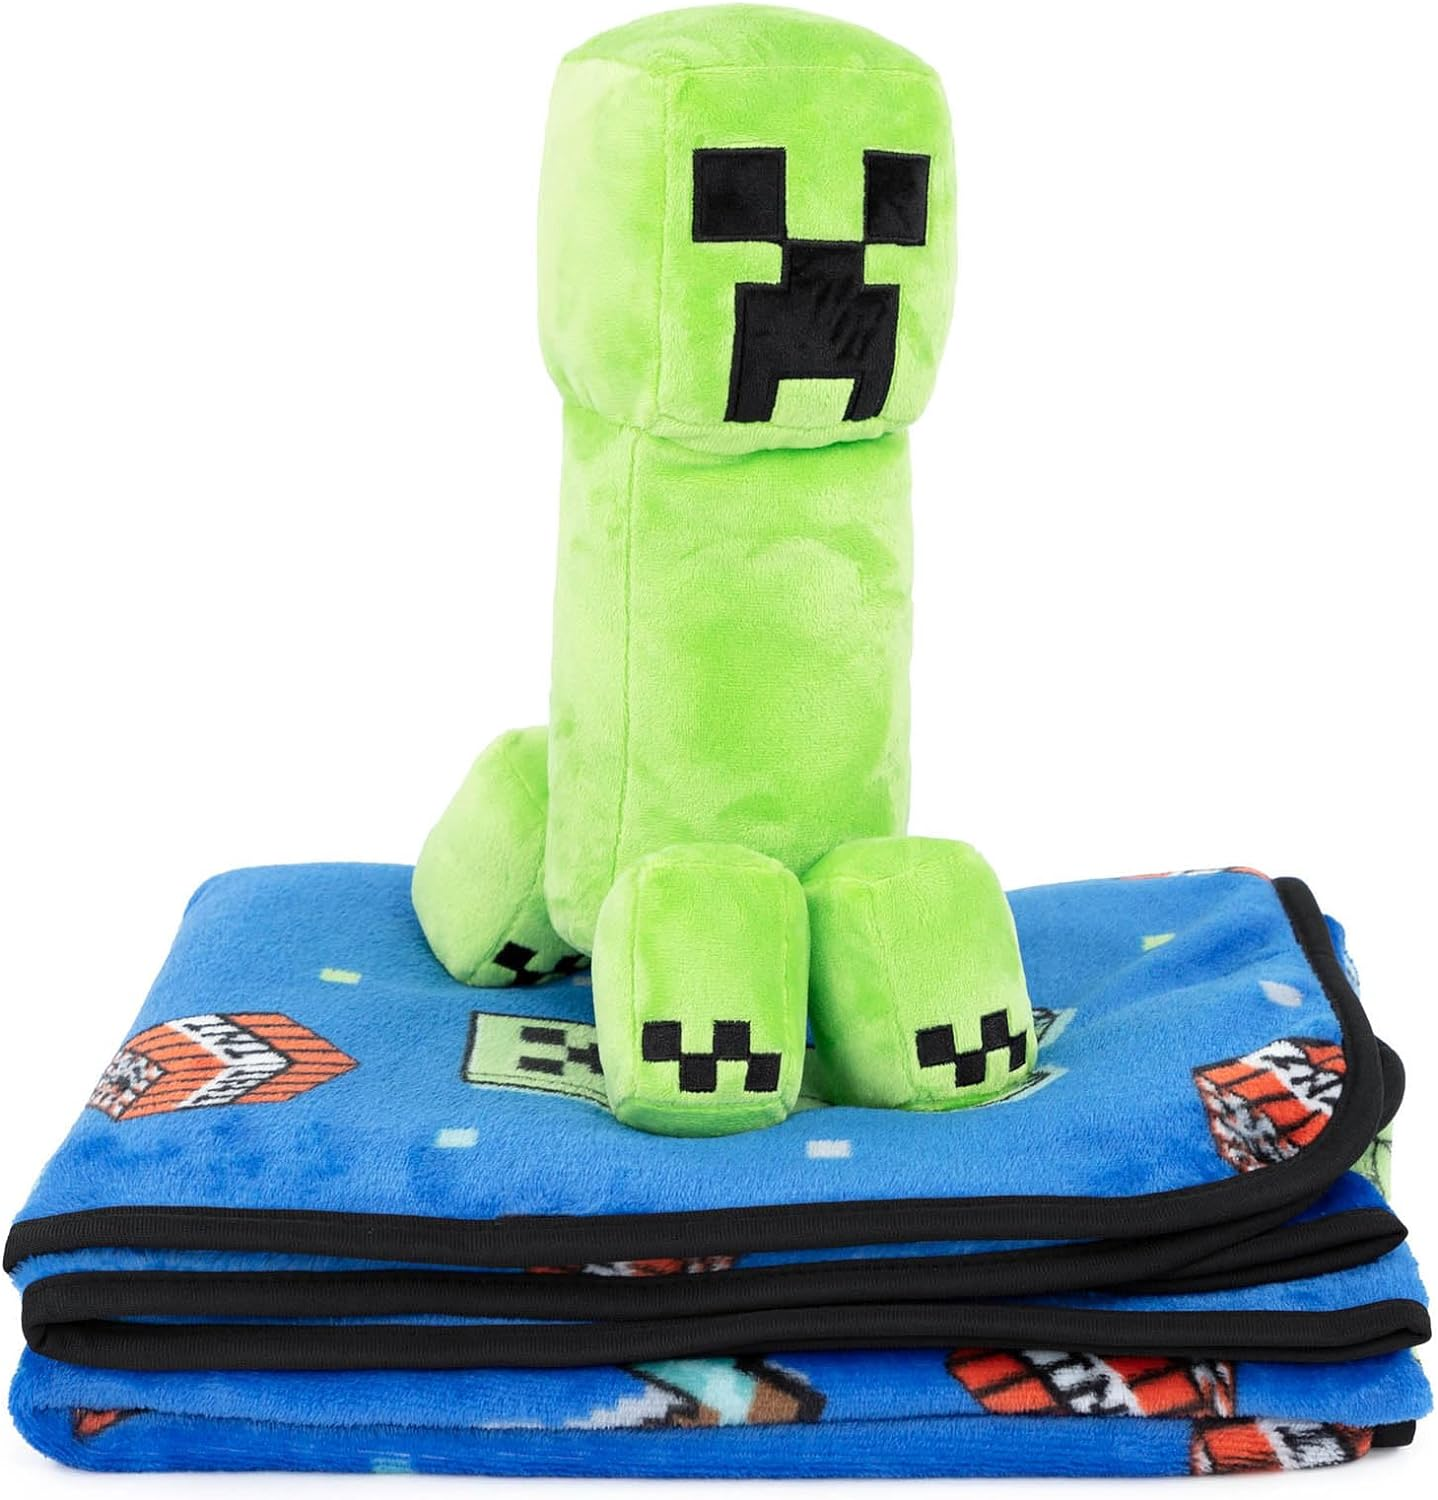 Minecraft Creeper Plush Mini Pillow Buddy & 50 x 60 Inch Throw Blanket Set - Kids Super Soft 2 Piece Cuddle Set